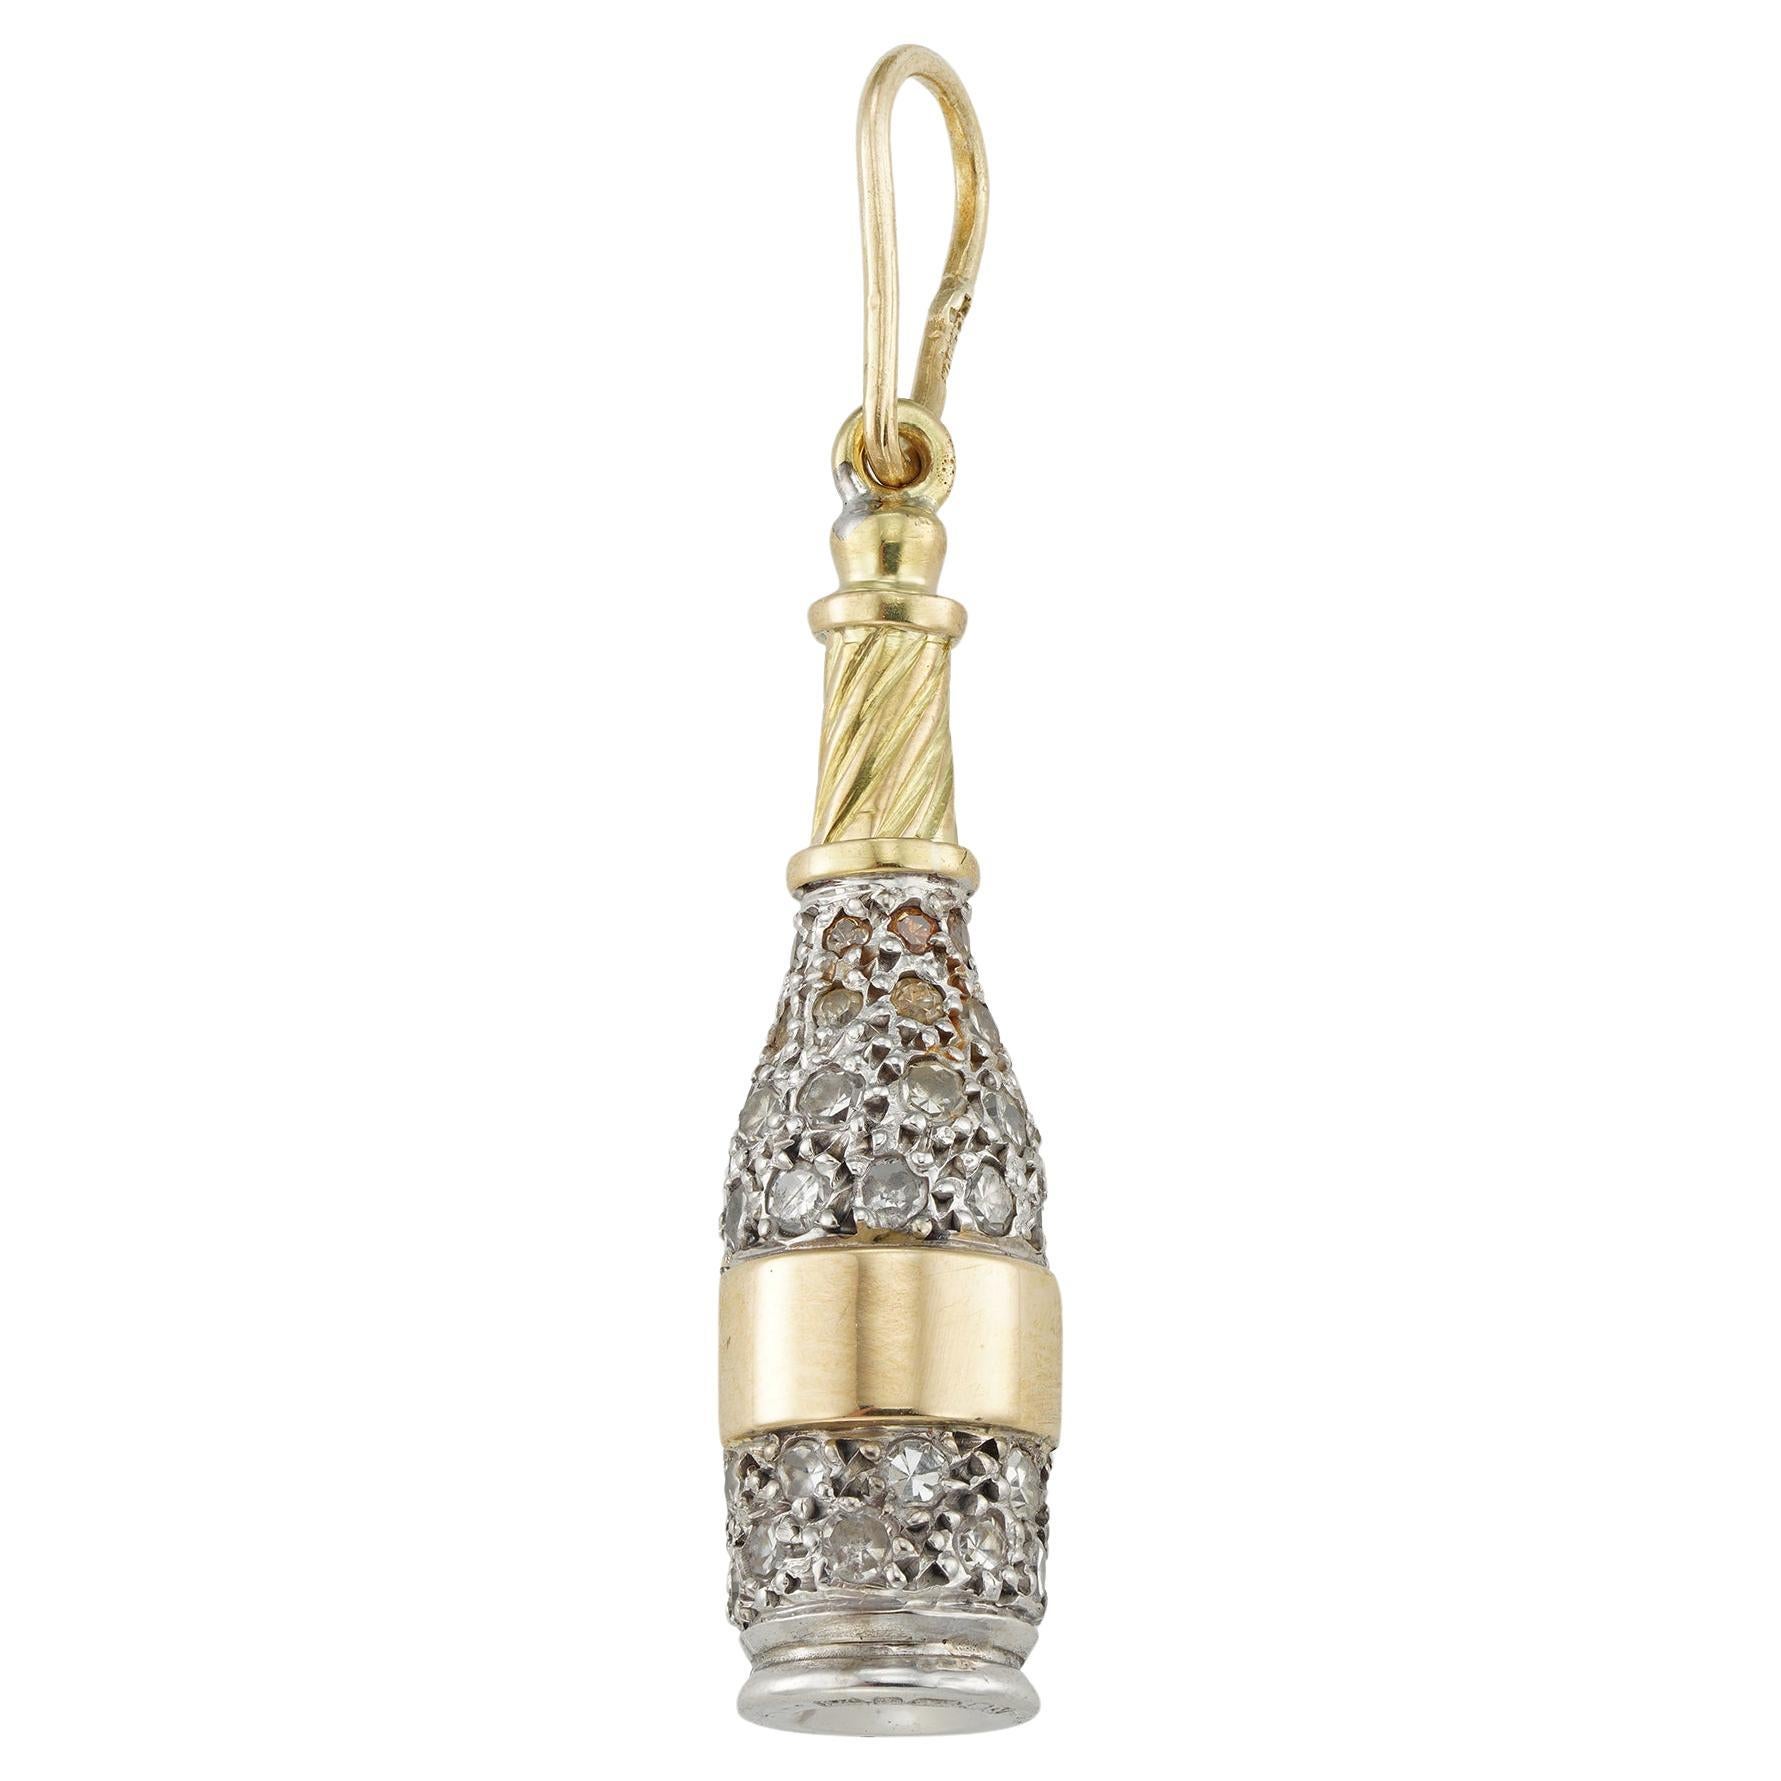 A diamond-set champagne bottle pendant